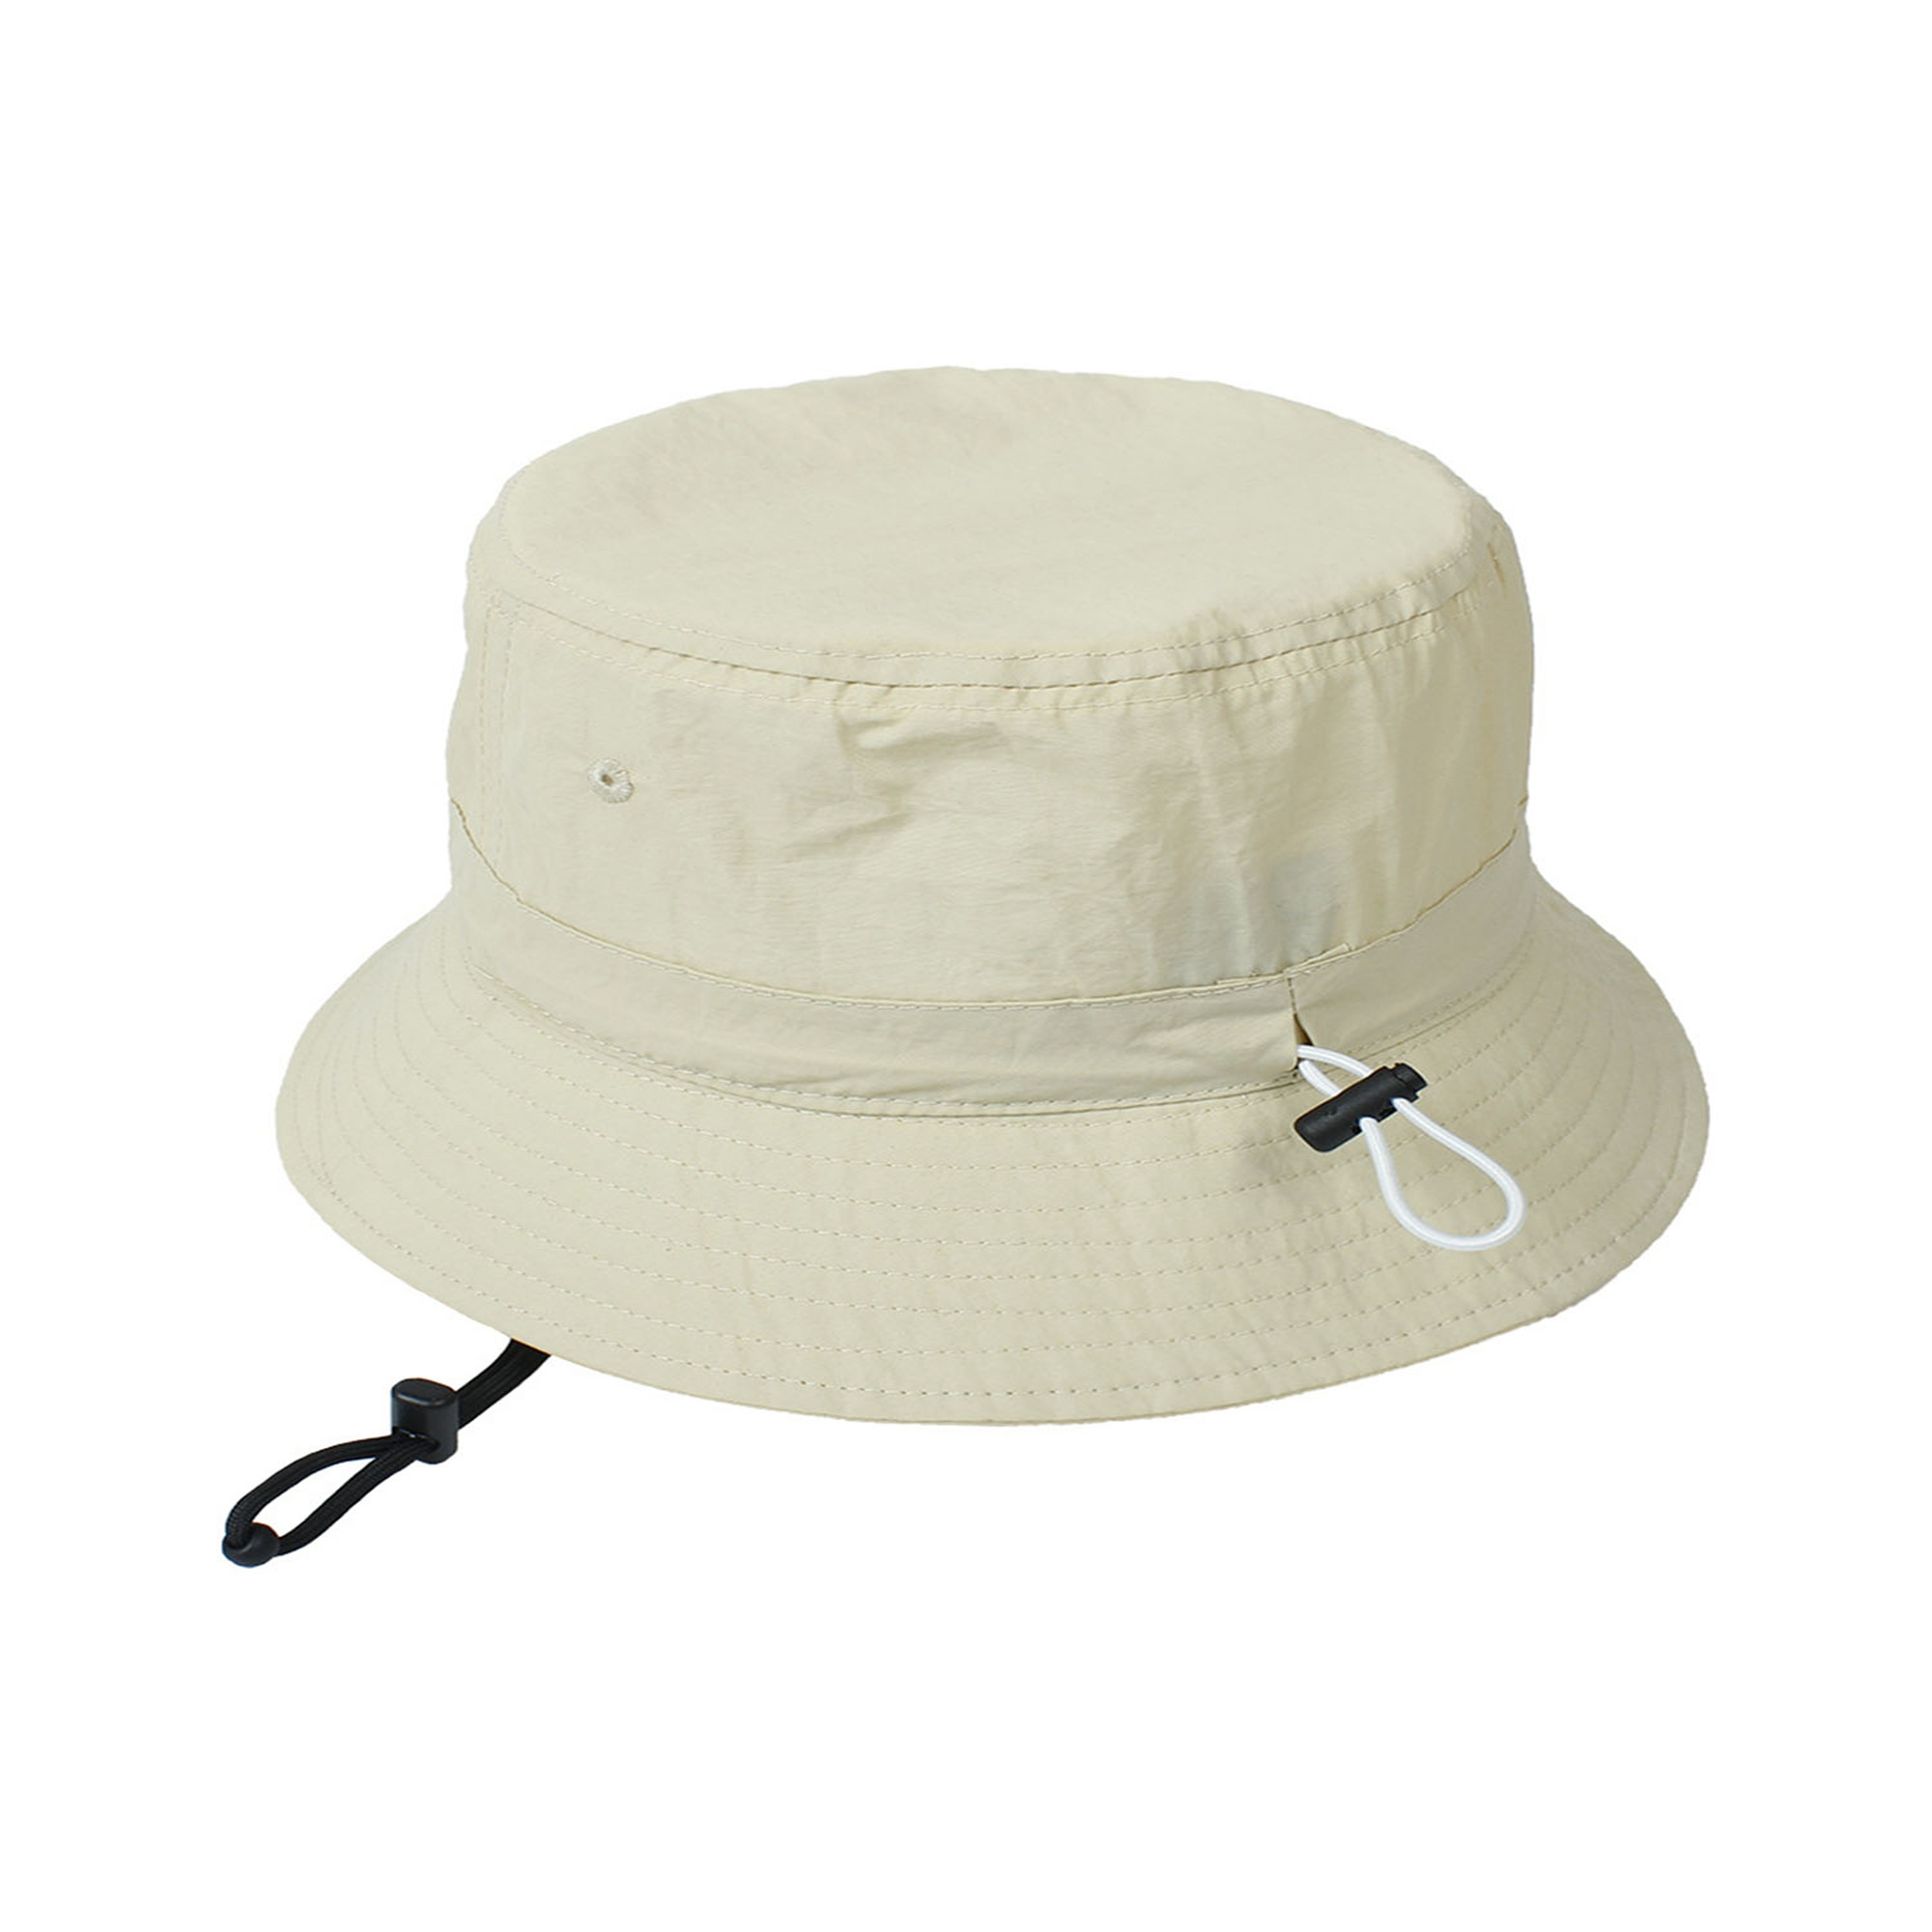 Binwwede Bucket Sun Hat Fishing Hat Summer Travel Beach Sun Hat UPF 50 UV Protection Packable Summer Fisherman Cap MHXX - image 3 of 6